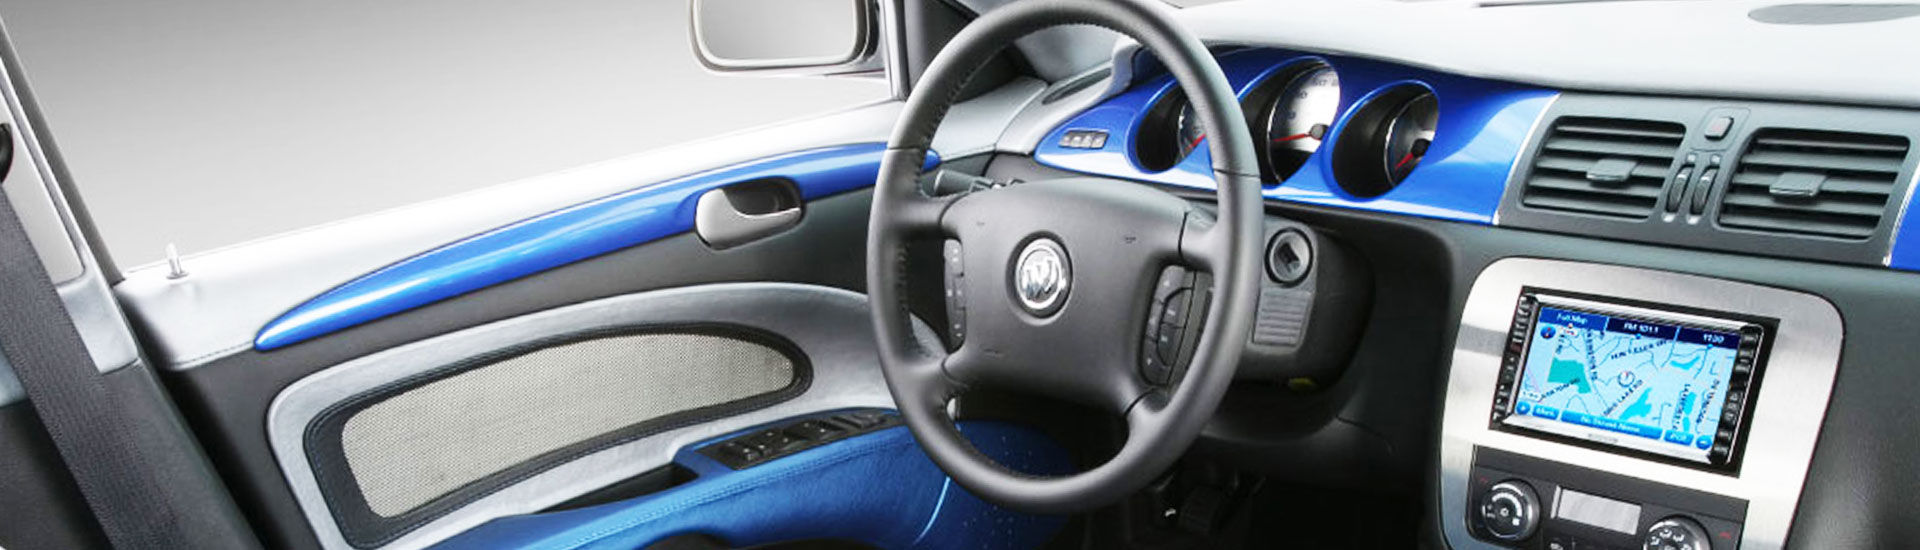 2016 Buick Regal Dash Kits